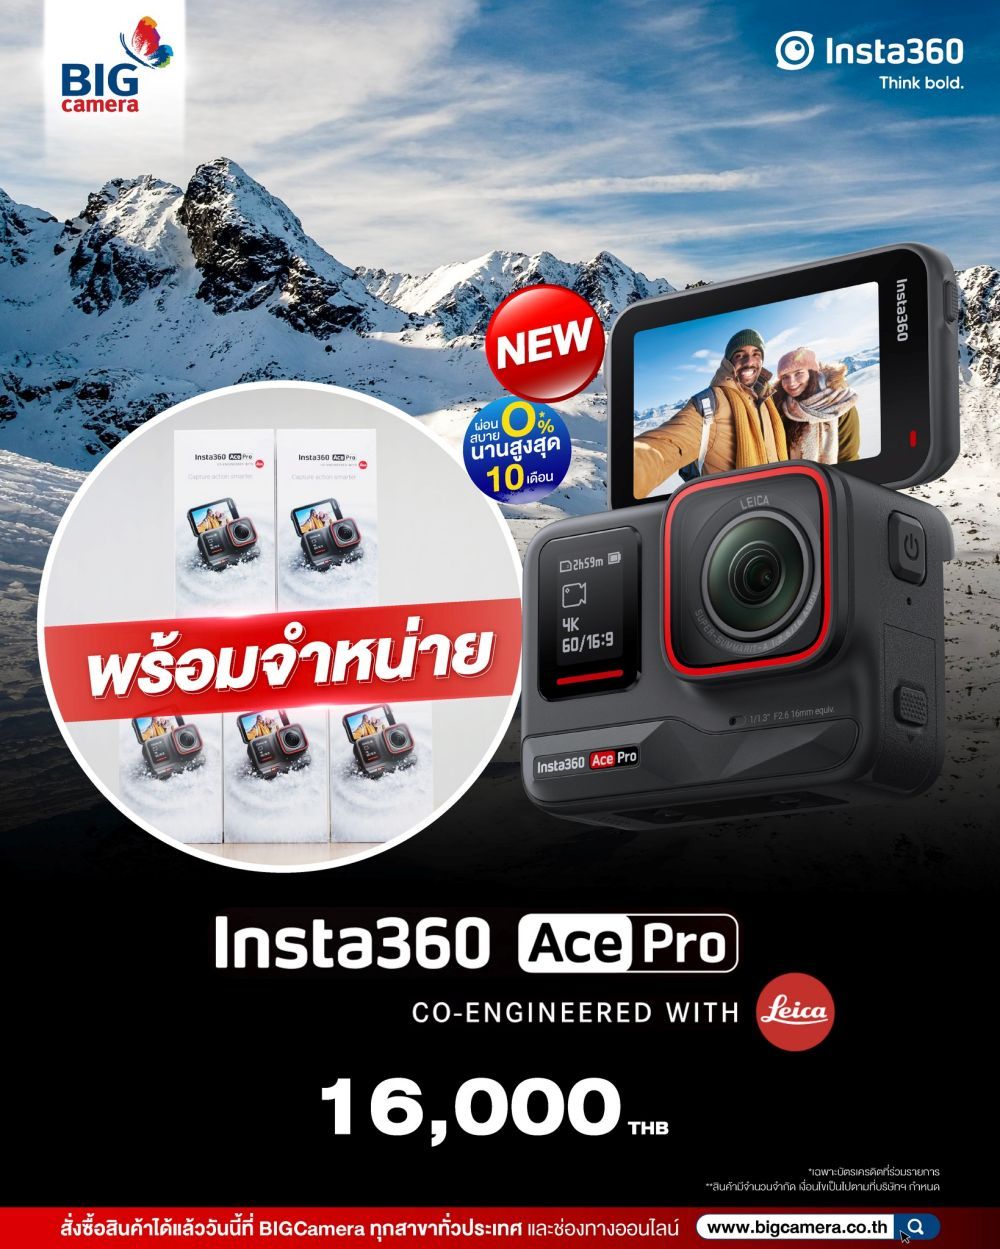 Insta360 Ace Pro กล้อง Action Cam ช็อตเดียวเก็บครบทุกมุม พร้อมจำหน่าย ราคา 16,000.-